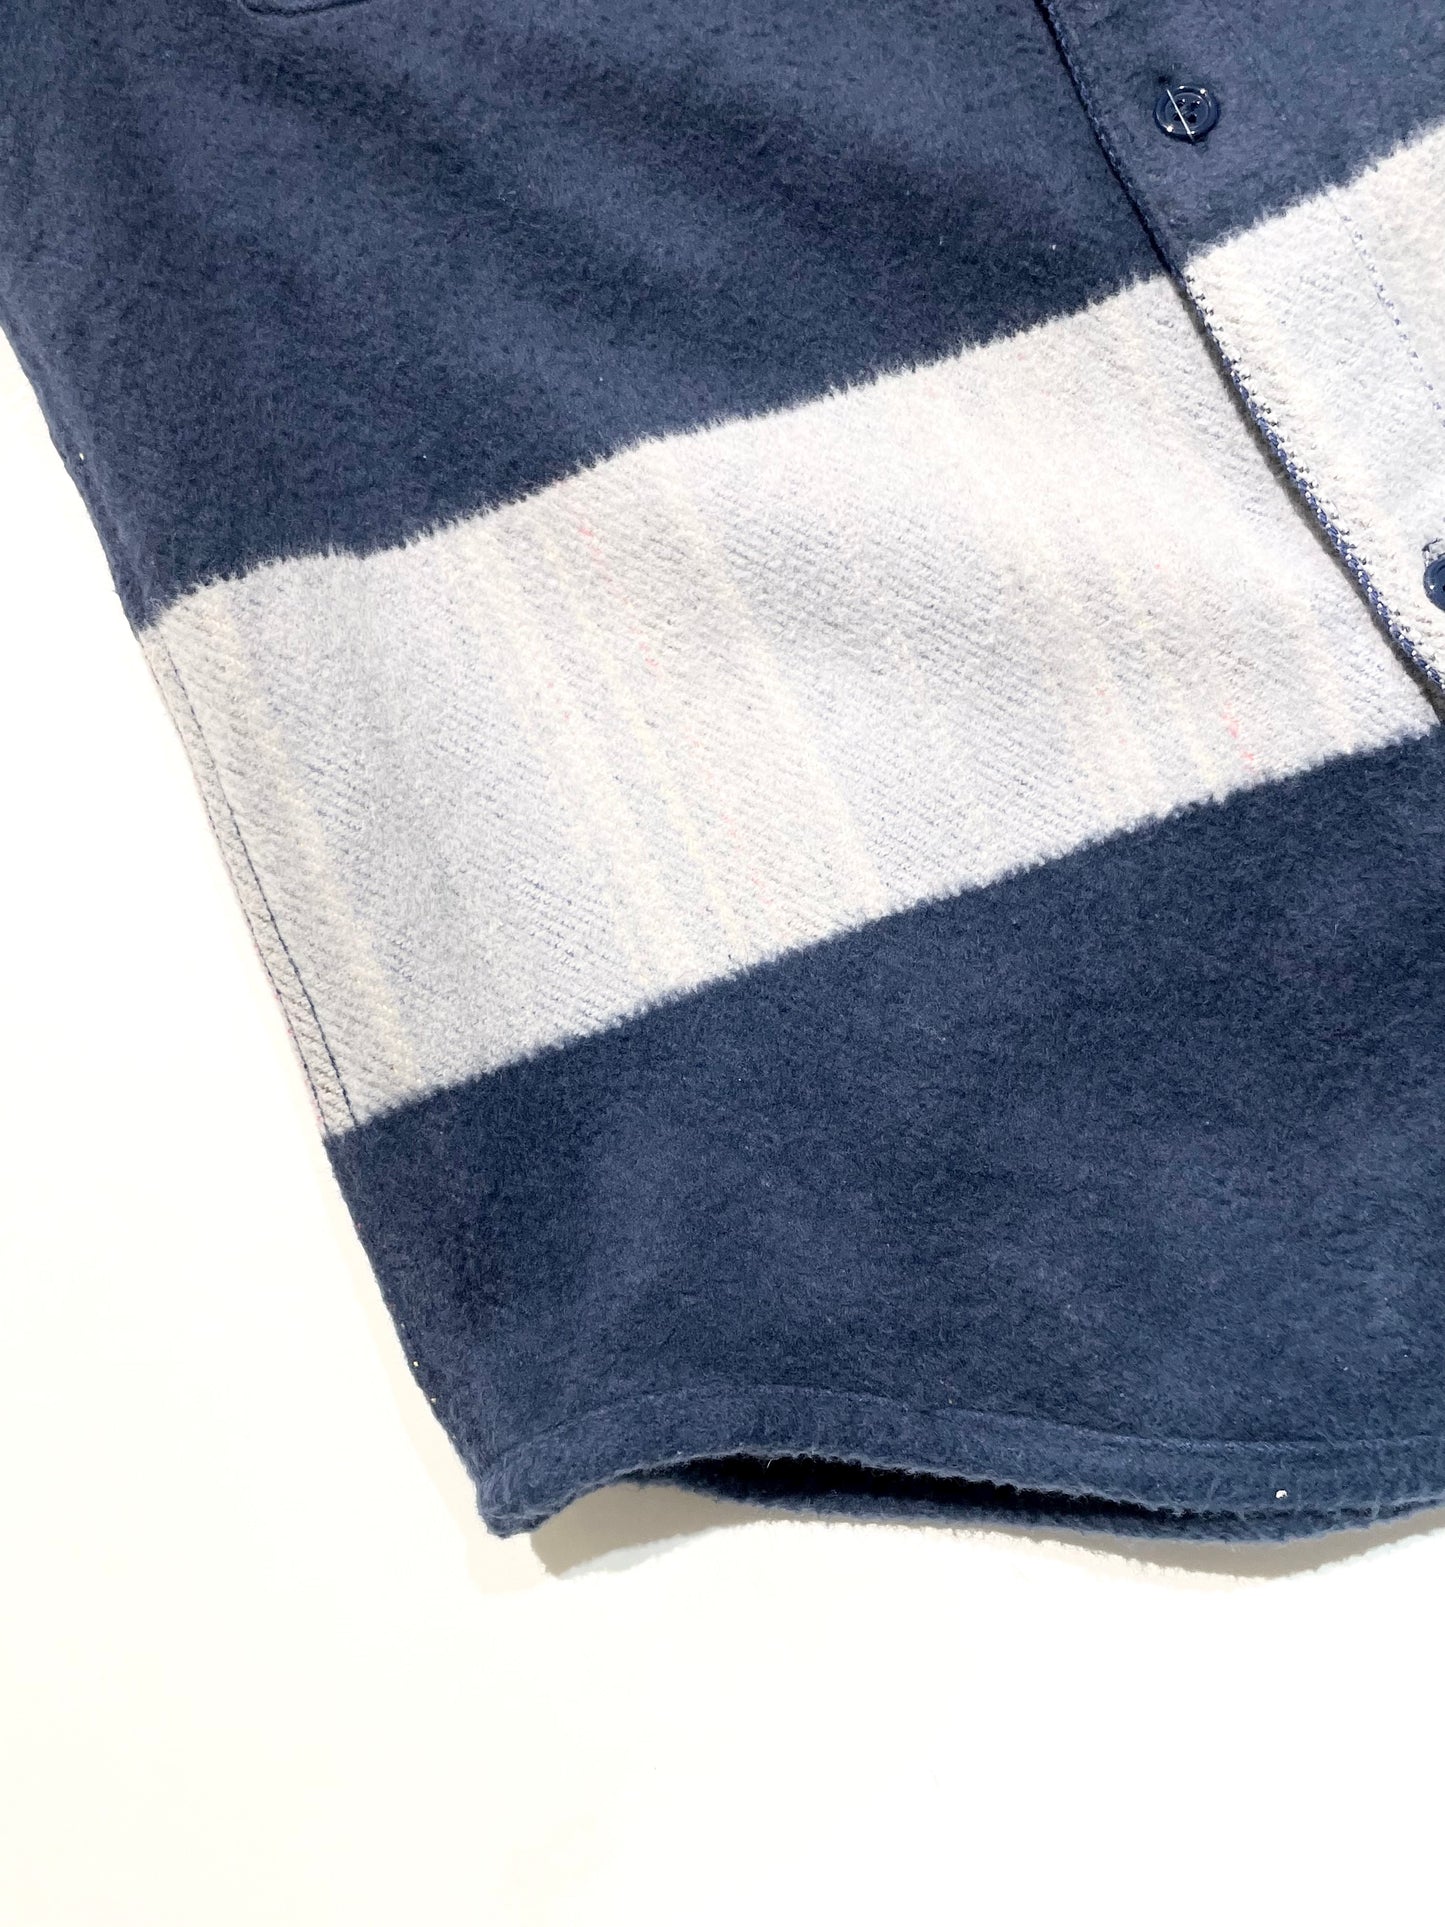 Nigel Cabourn Blanket Reversible Flannel Shirt